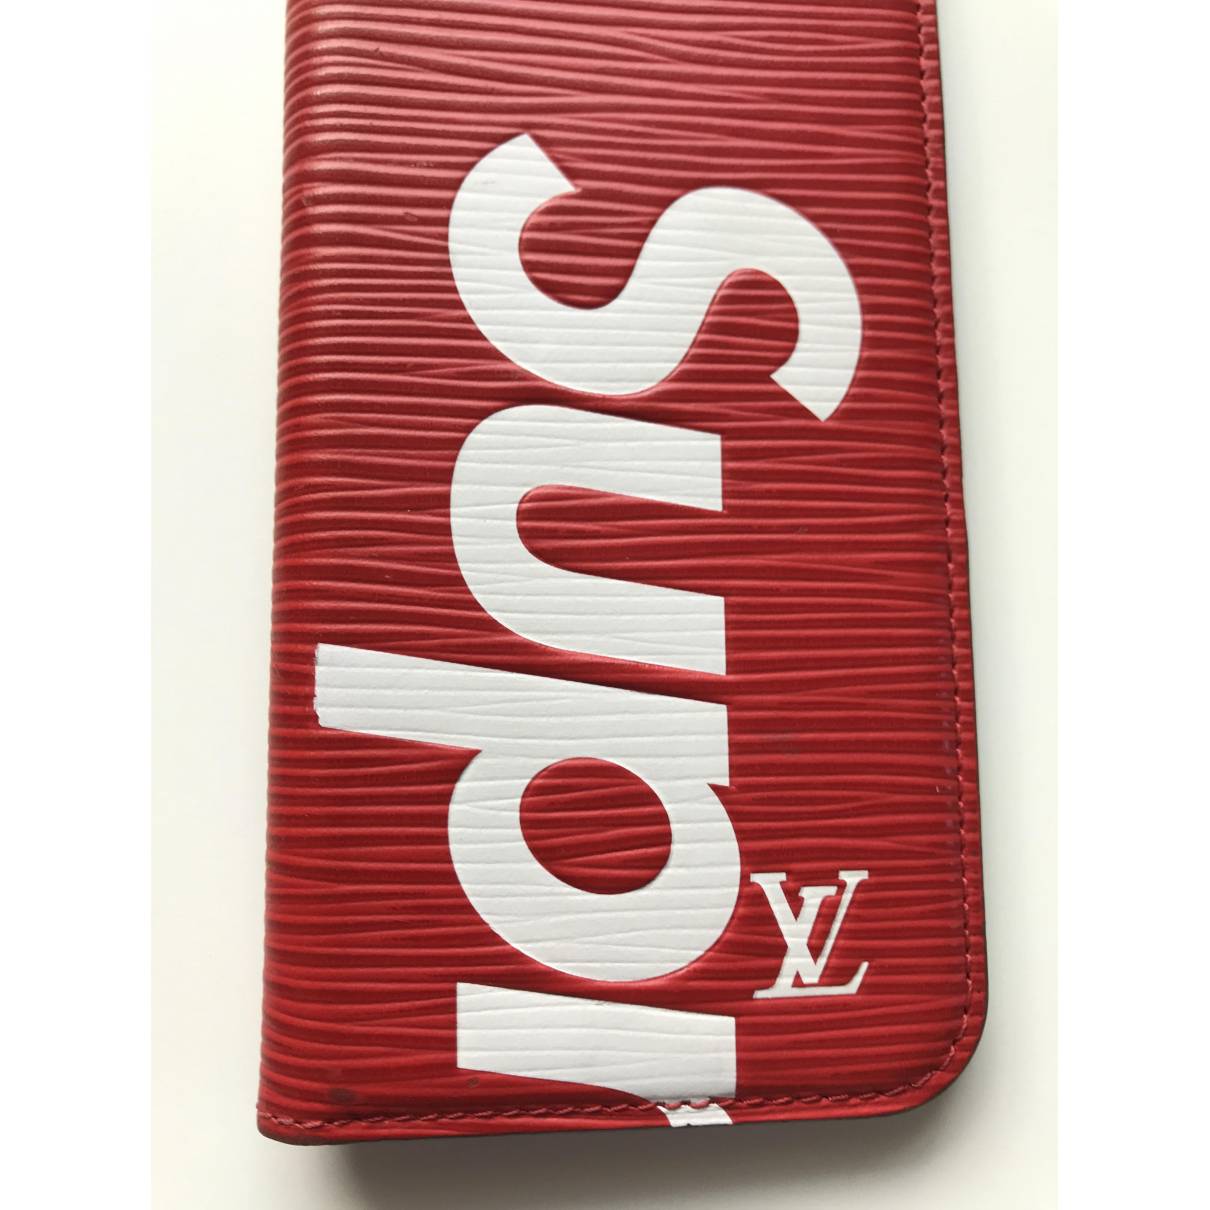 Louis Vuitton Supreme iPhone Cases for Sale